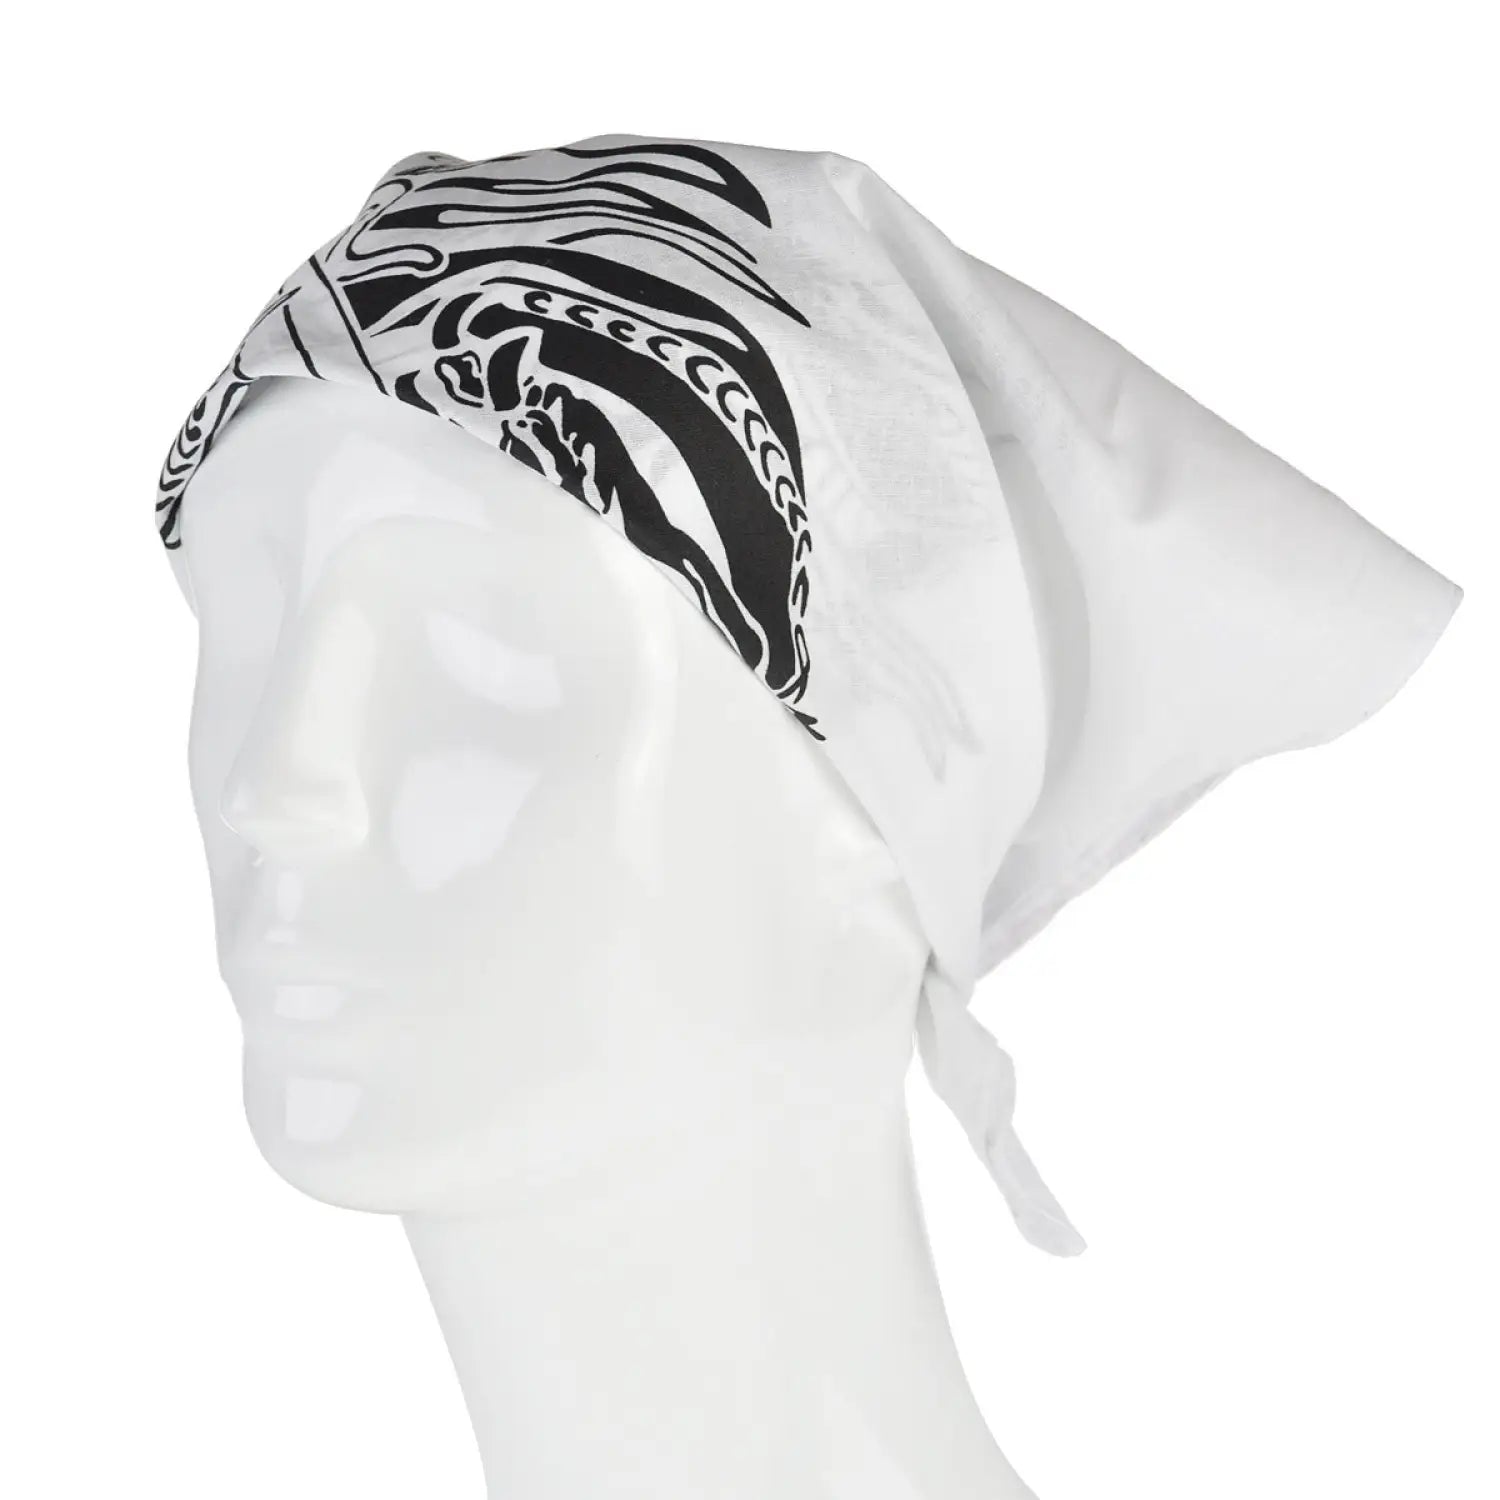 Dragon & Sword Print Bandana - 100% Cotton, white headband with black and white designs